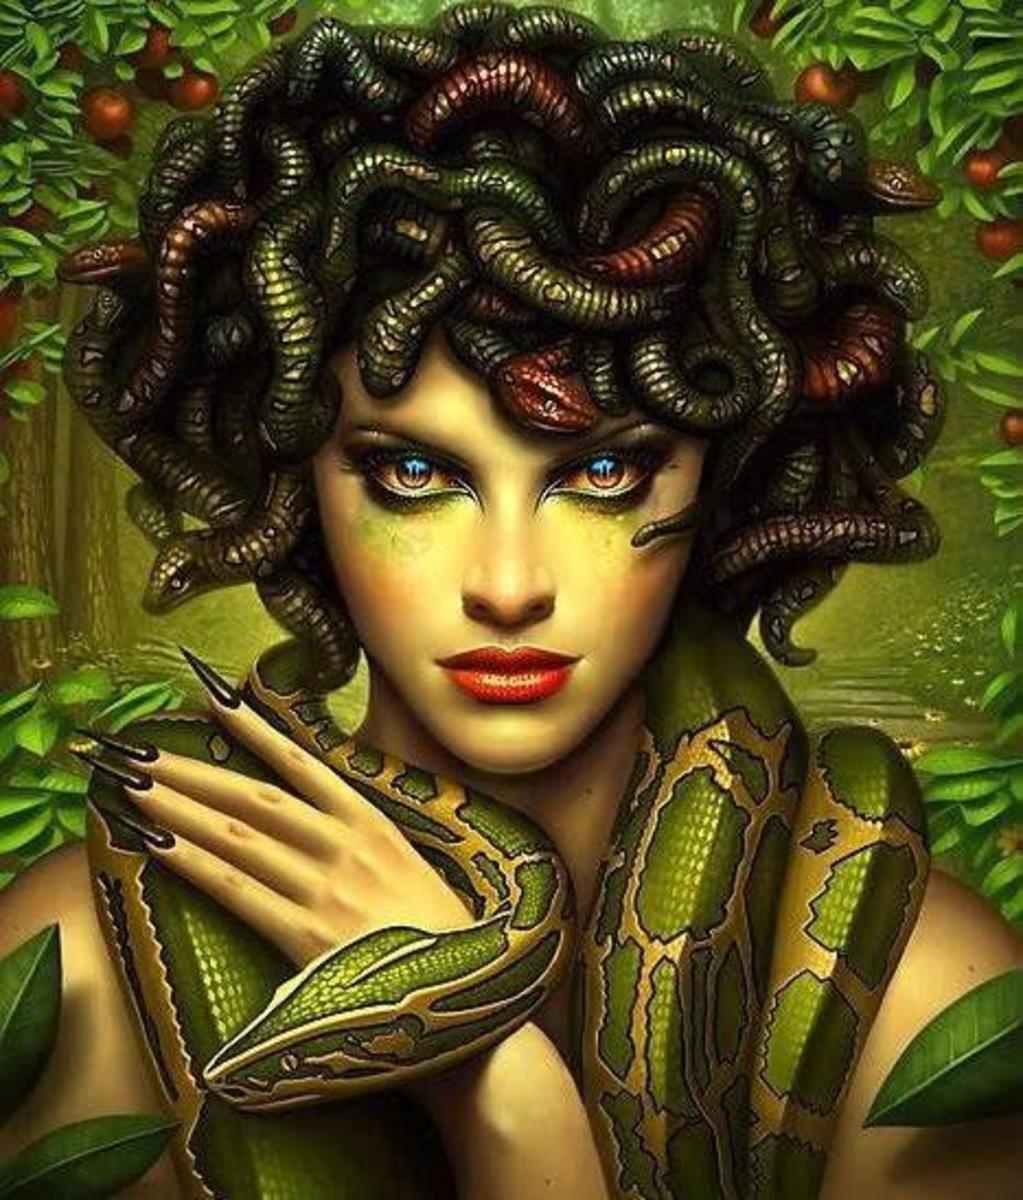 the-cursed-curly-haired-beauty-of-greek-mythology-medusa